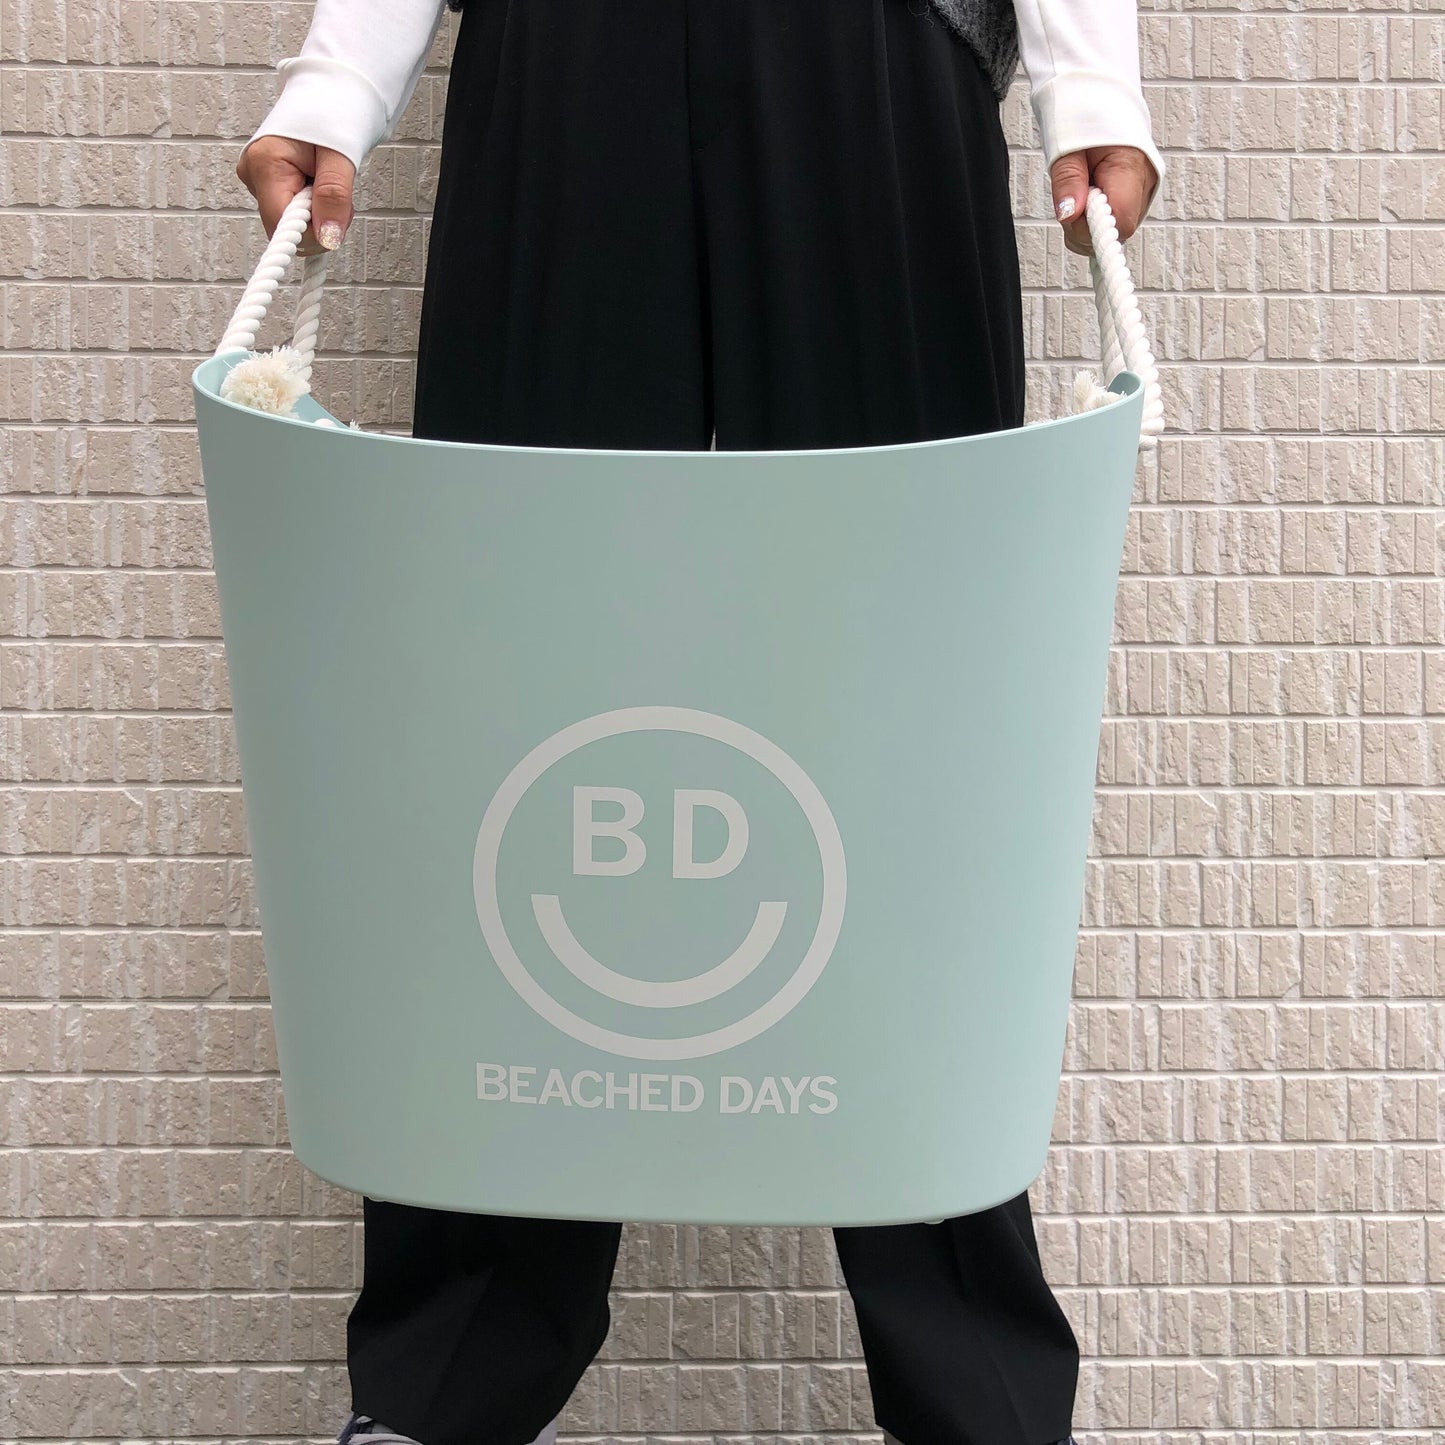 BD bucket 